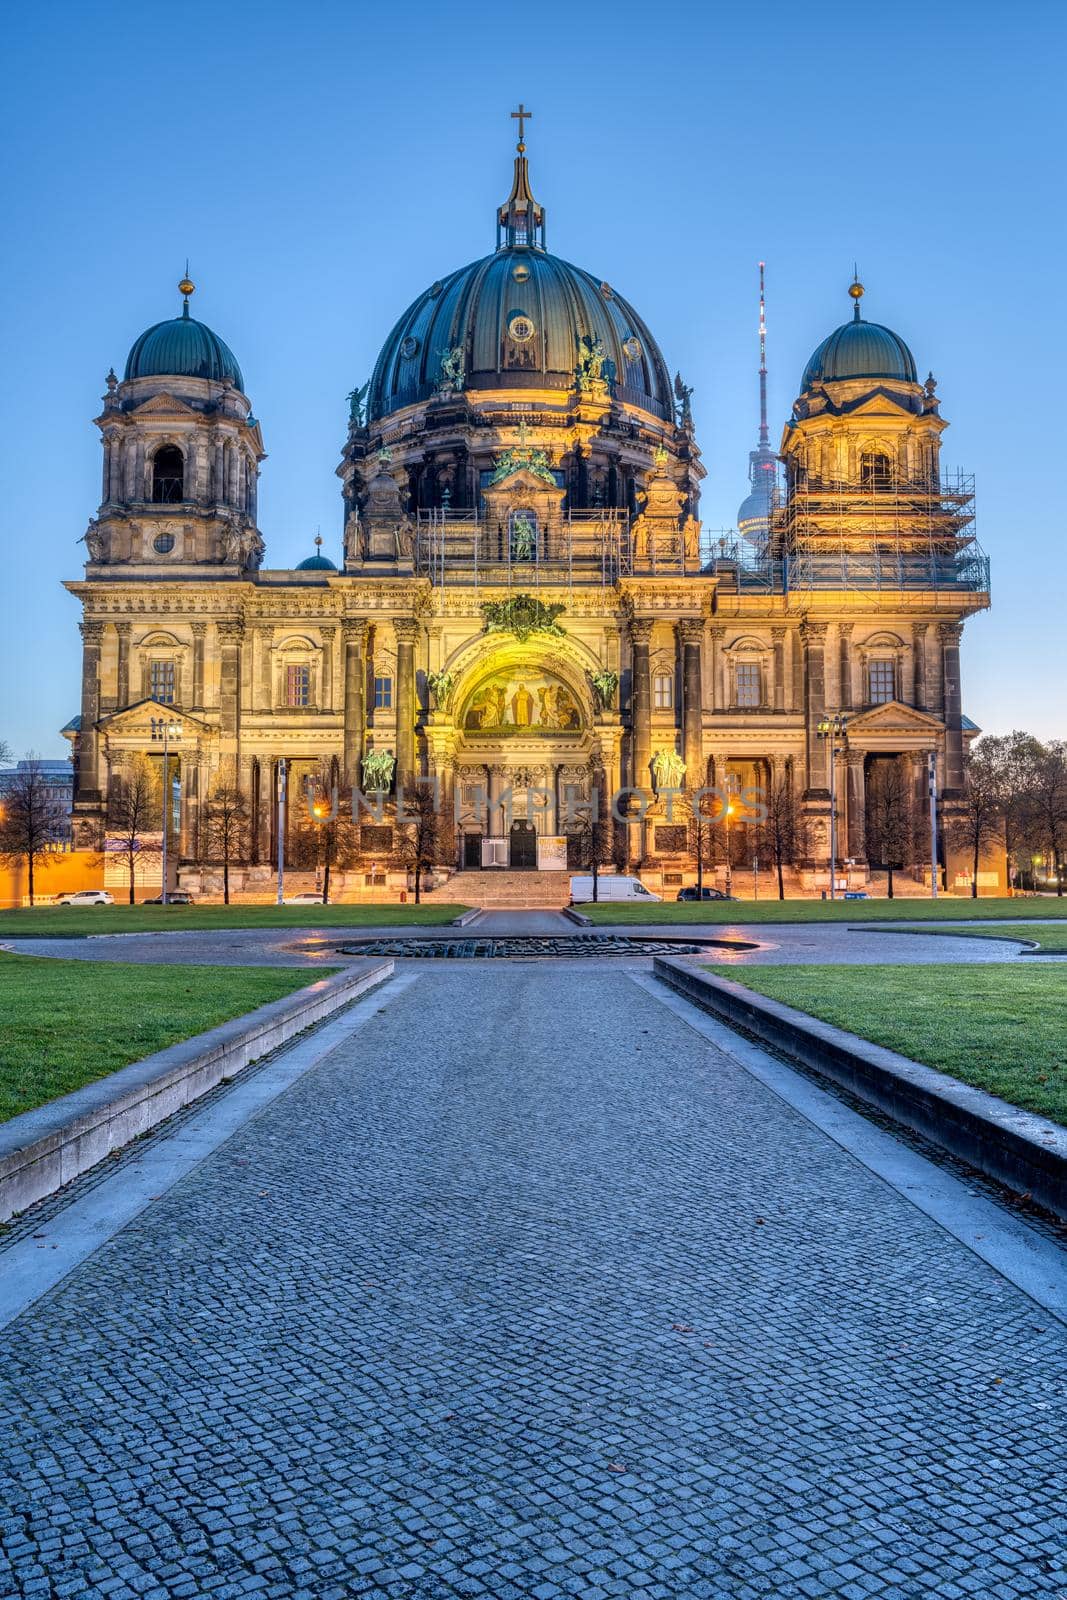 The illuminated Berliner Dom by elxeneize